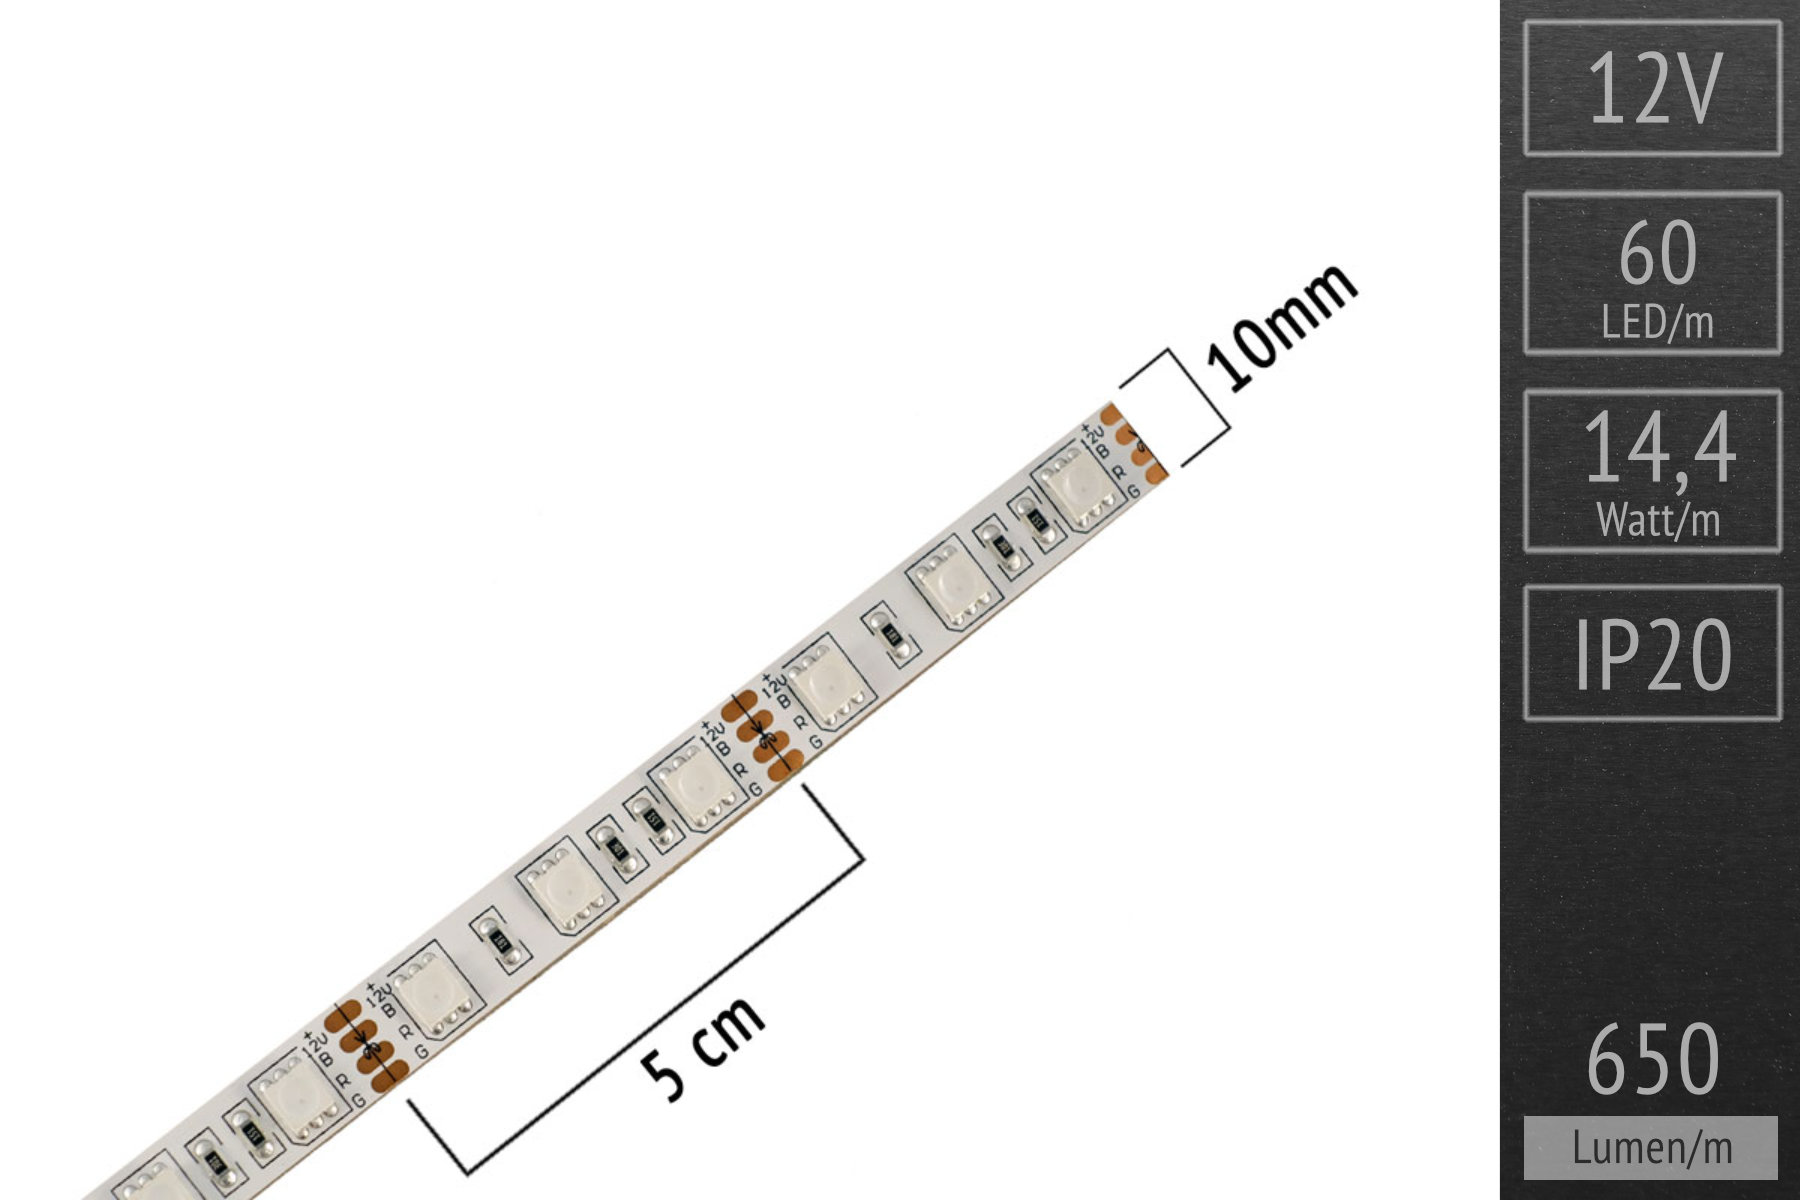 LED strip RGB 3in1 Standard: 60 LEDs/m - 12V - IP20 5m roll